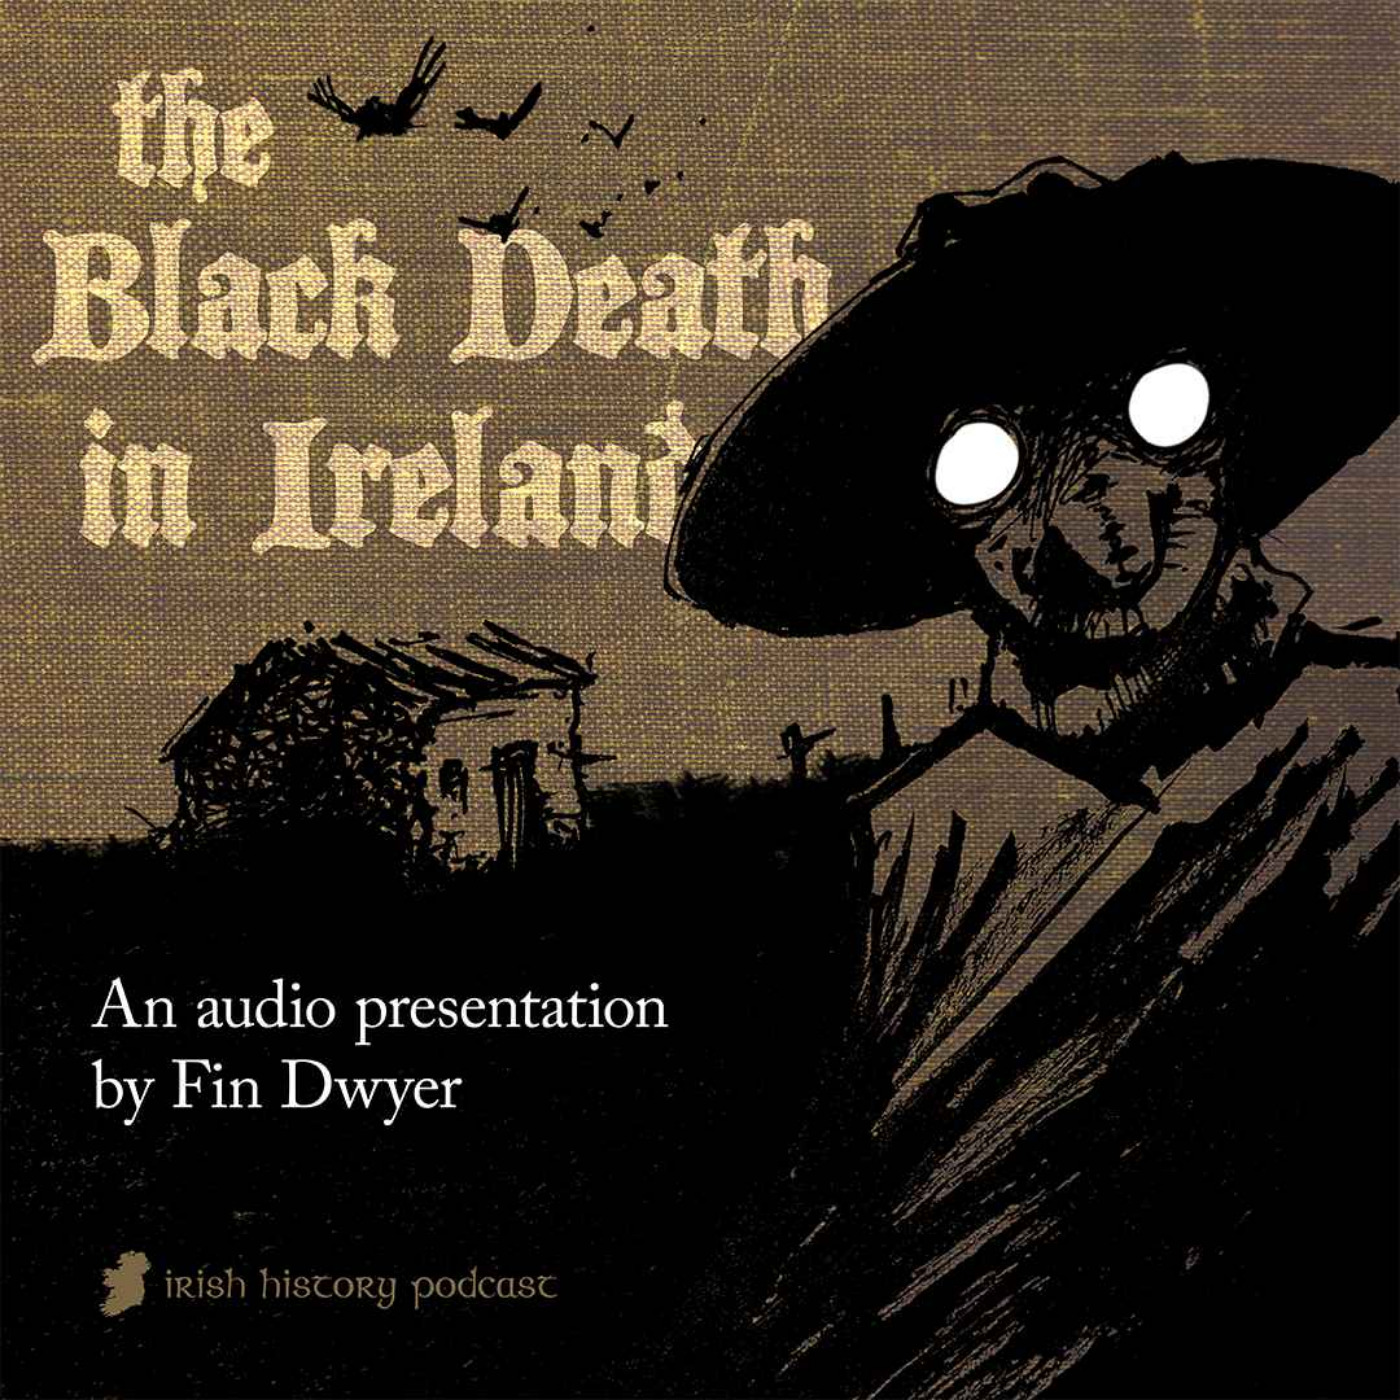 The Black Death in Ireland